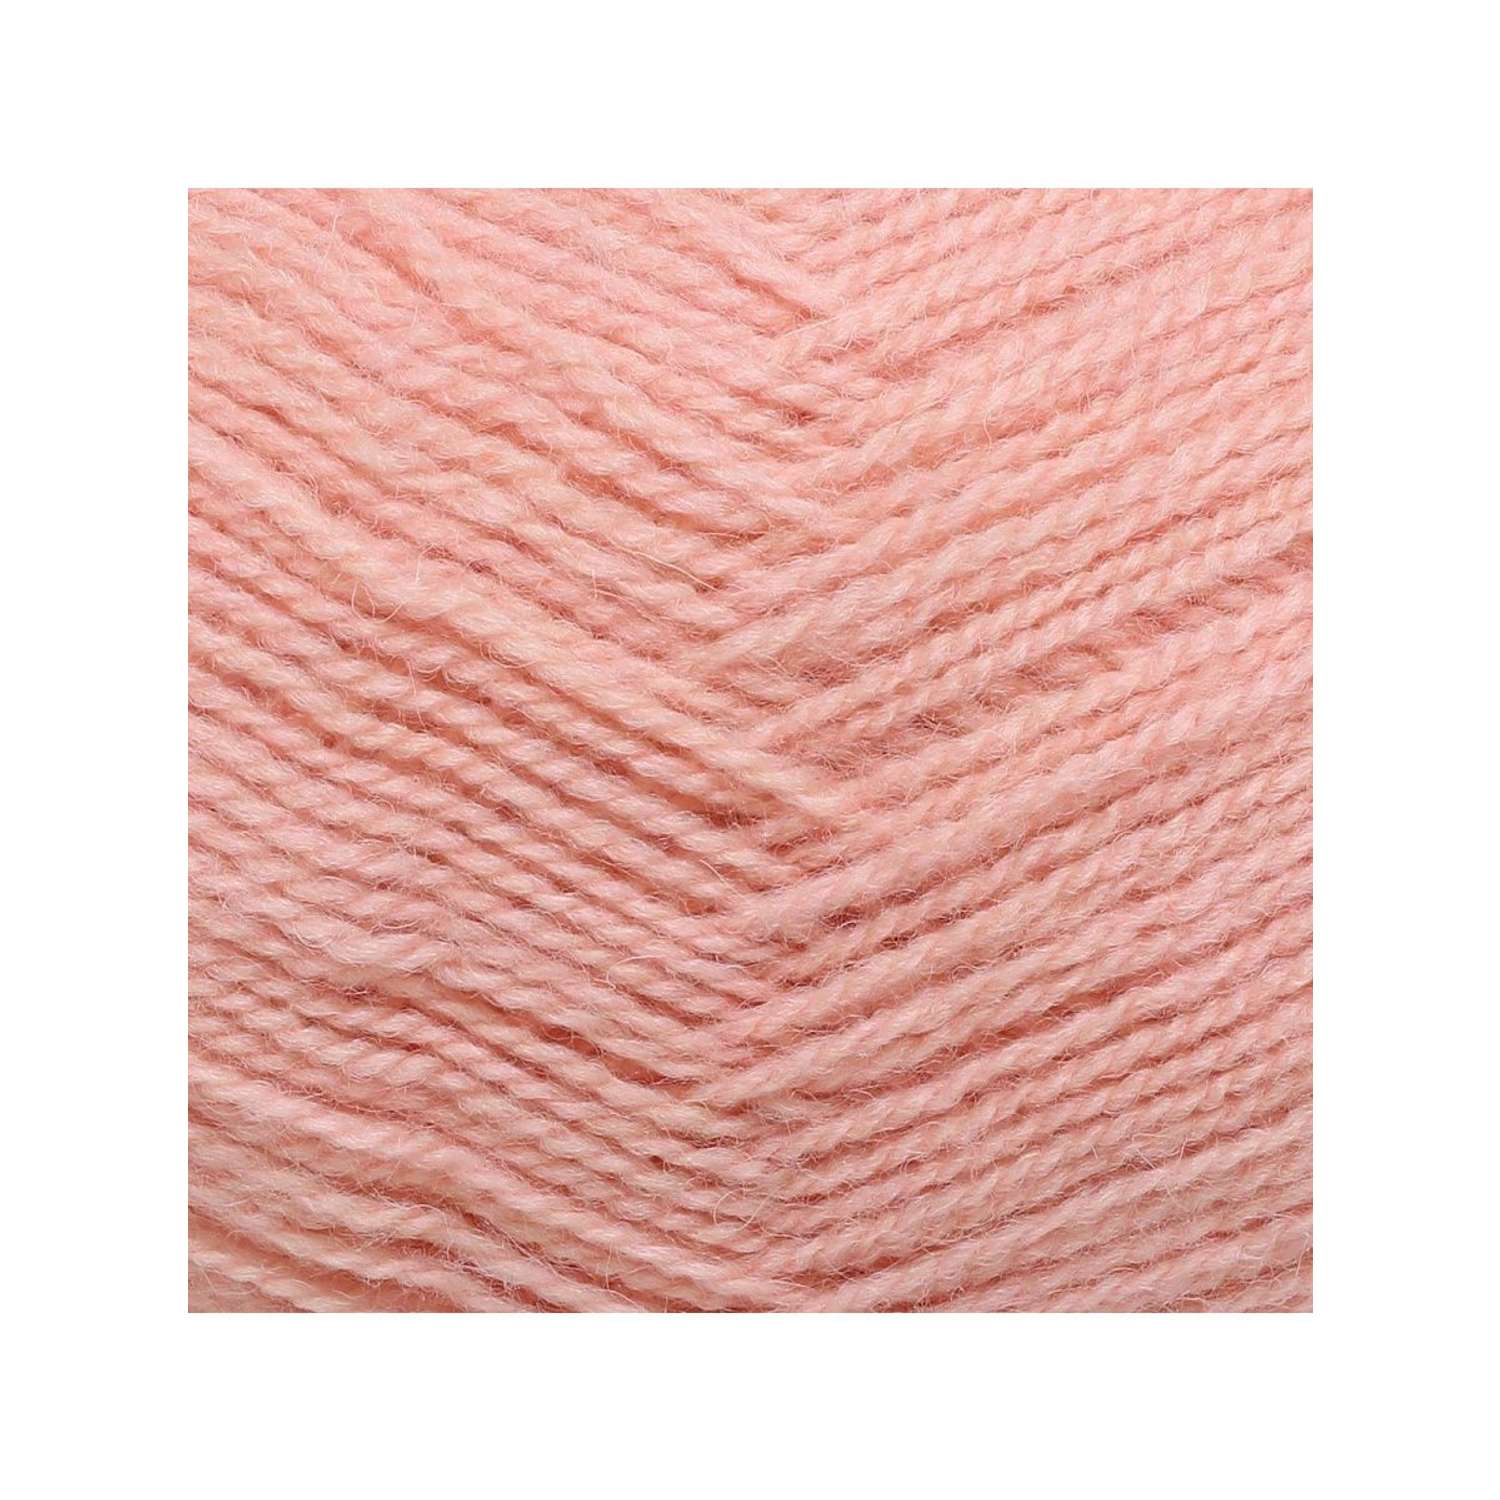 Пряжа Пехорка Ангорская тёплая полушерстяная 100 г 480 м 265 розовый персик 5 мотков - фото 3